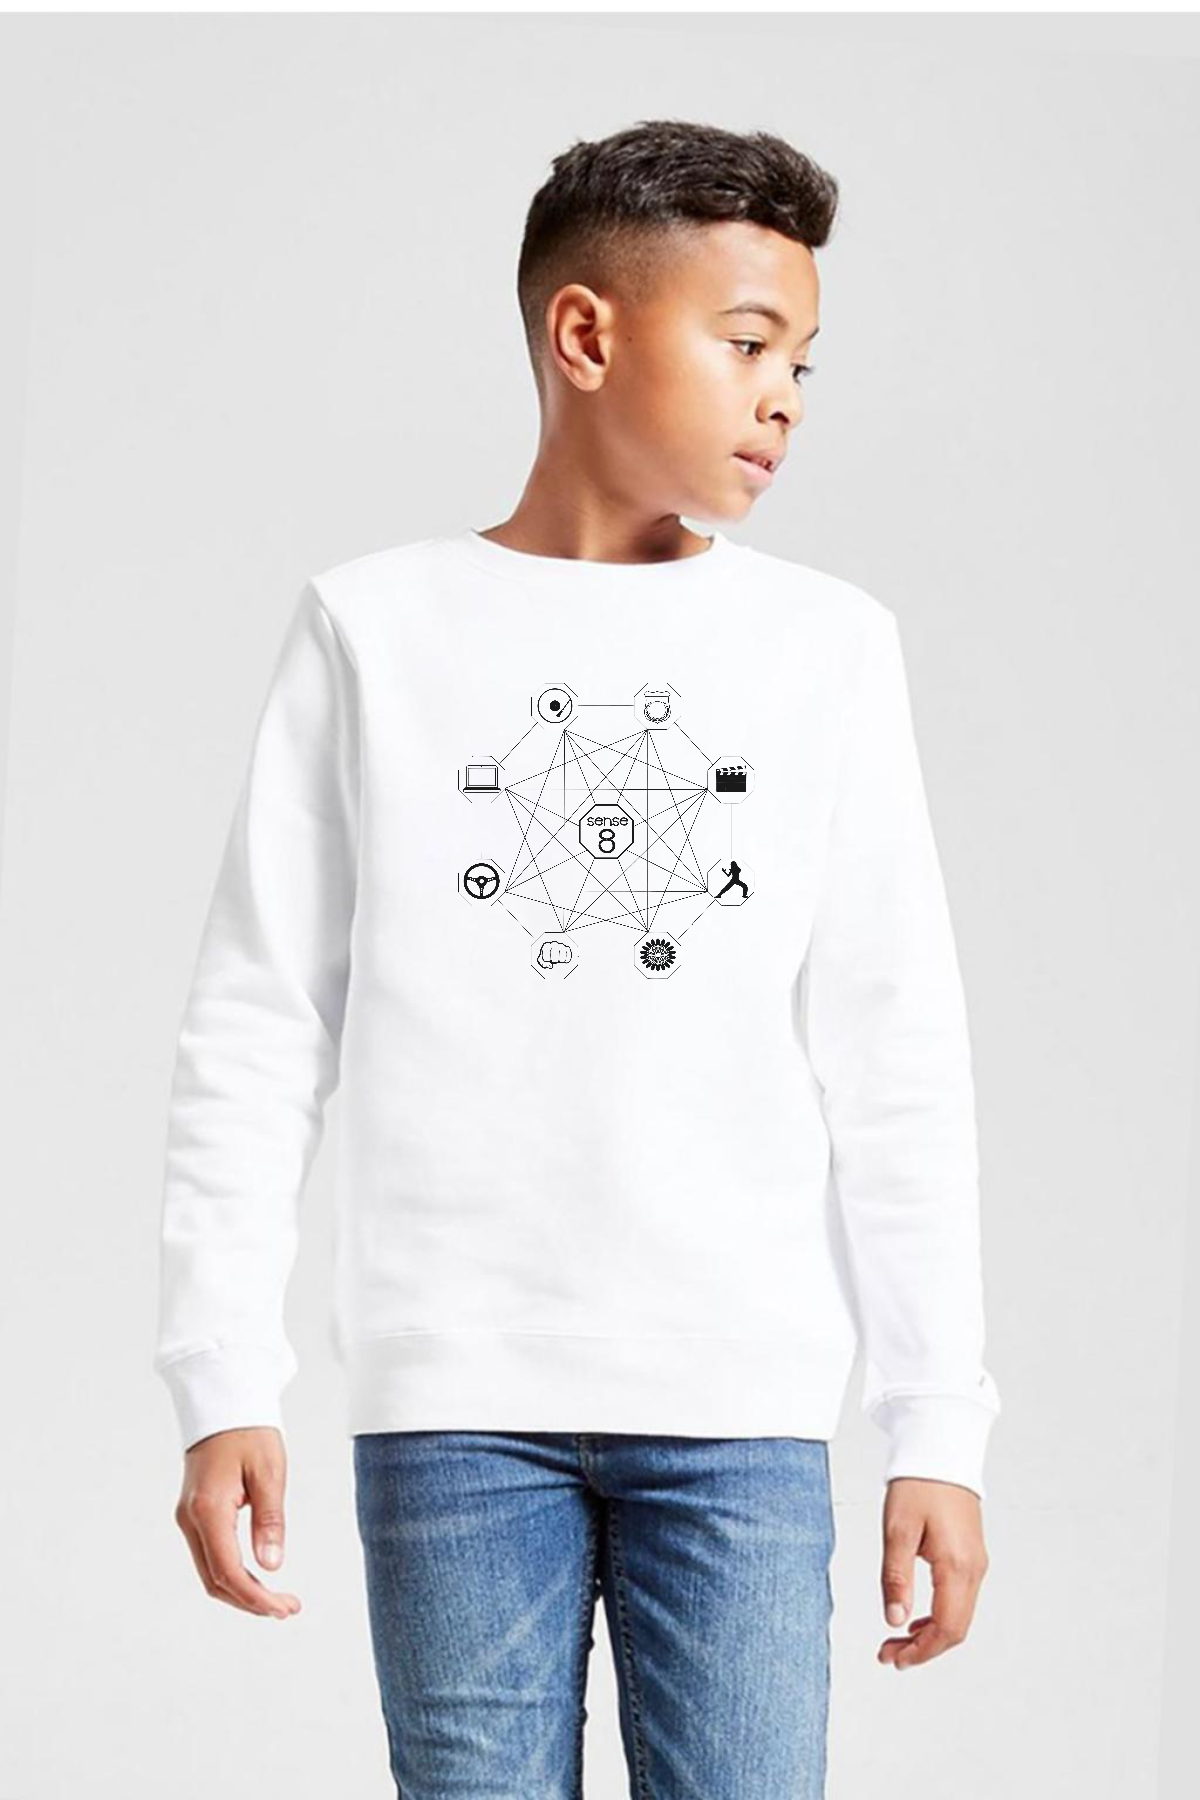 Sense8 Sensates Cluster Beyaz Çocuk 2ip Sweatshirt